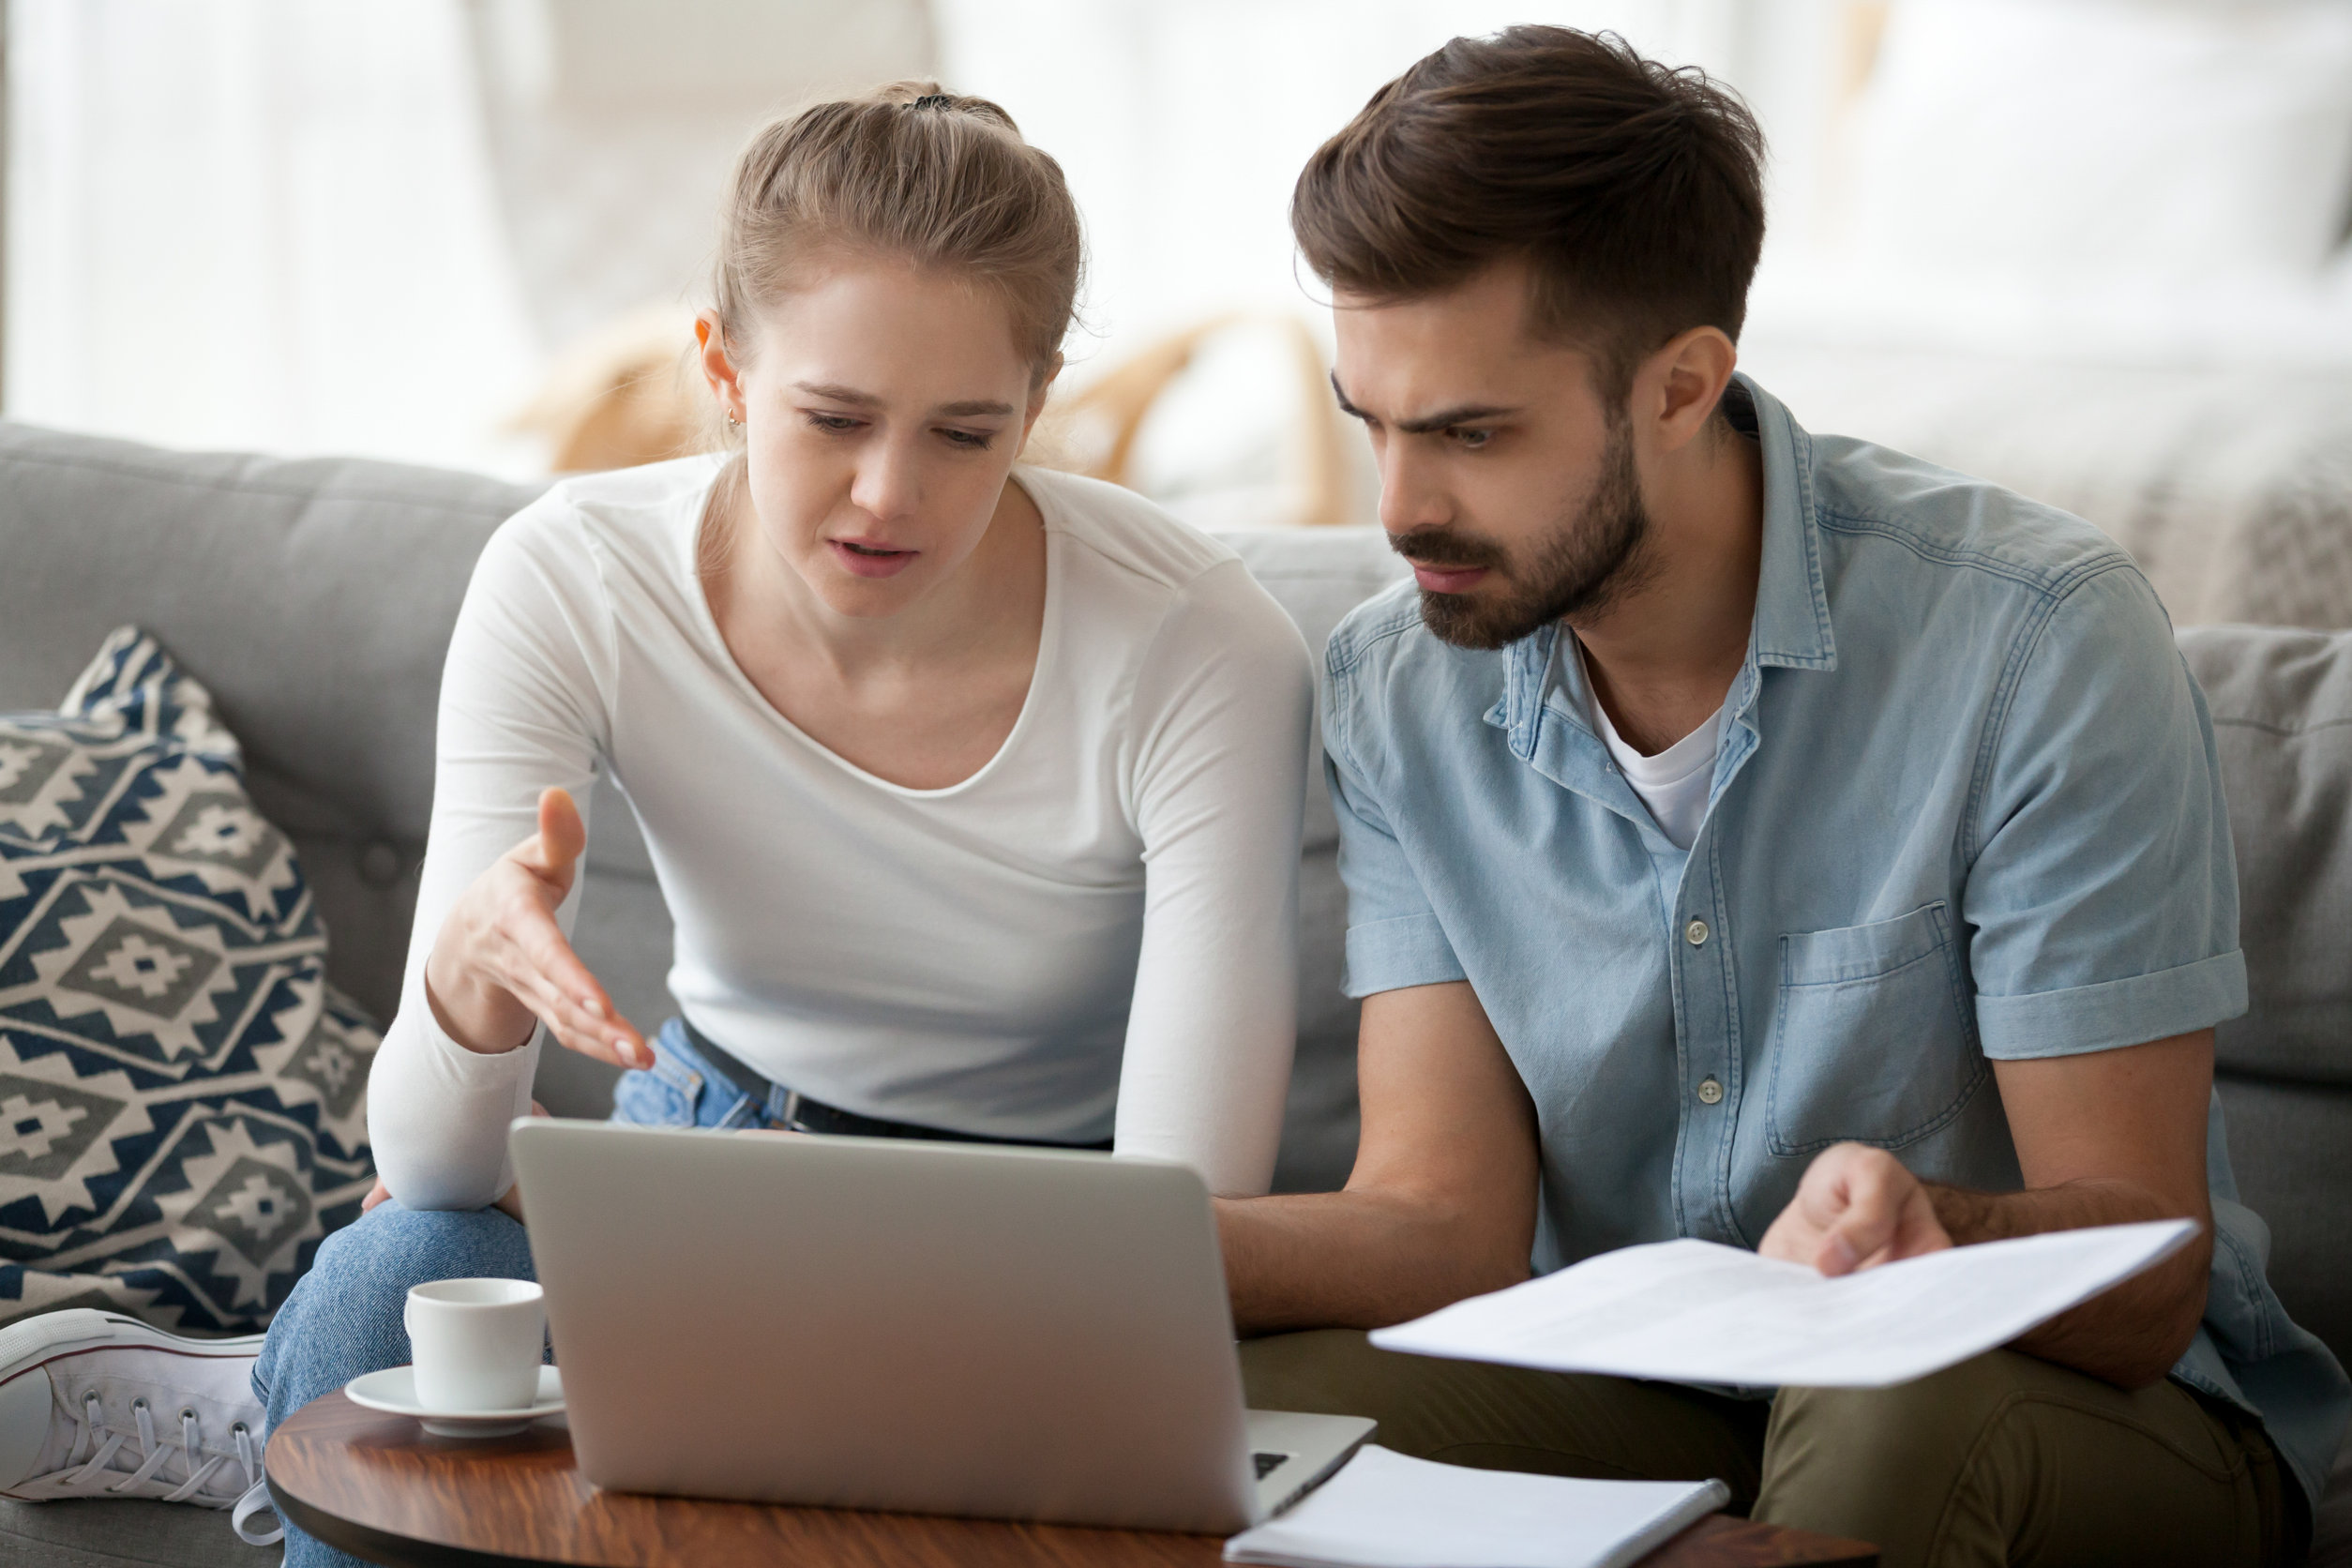 Image description: Two millennials discuss their finances in their home.